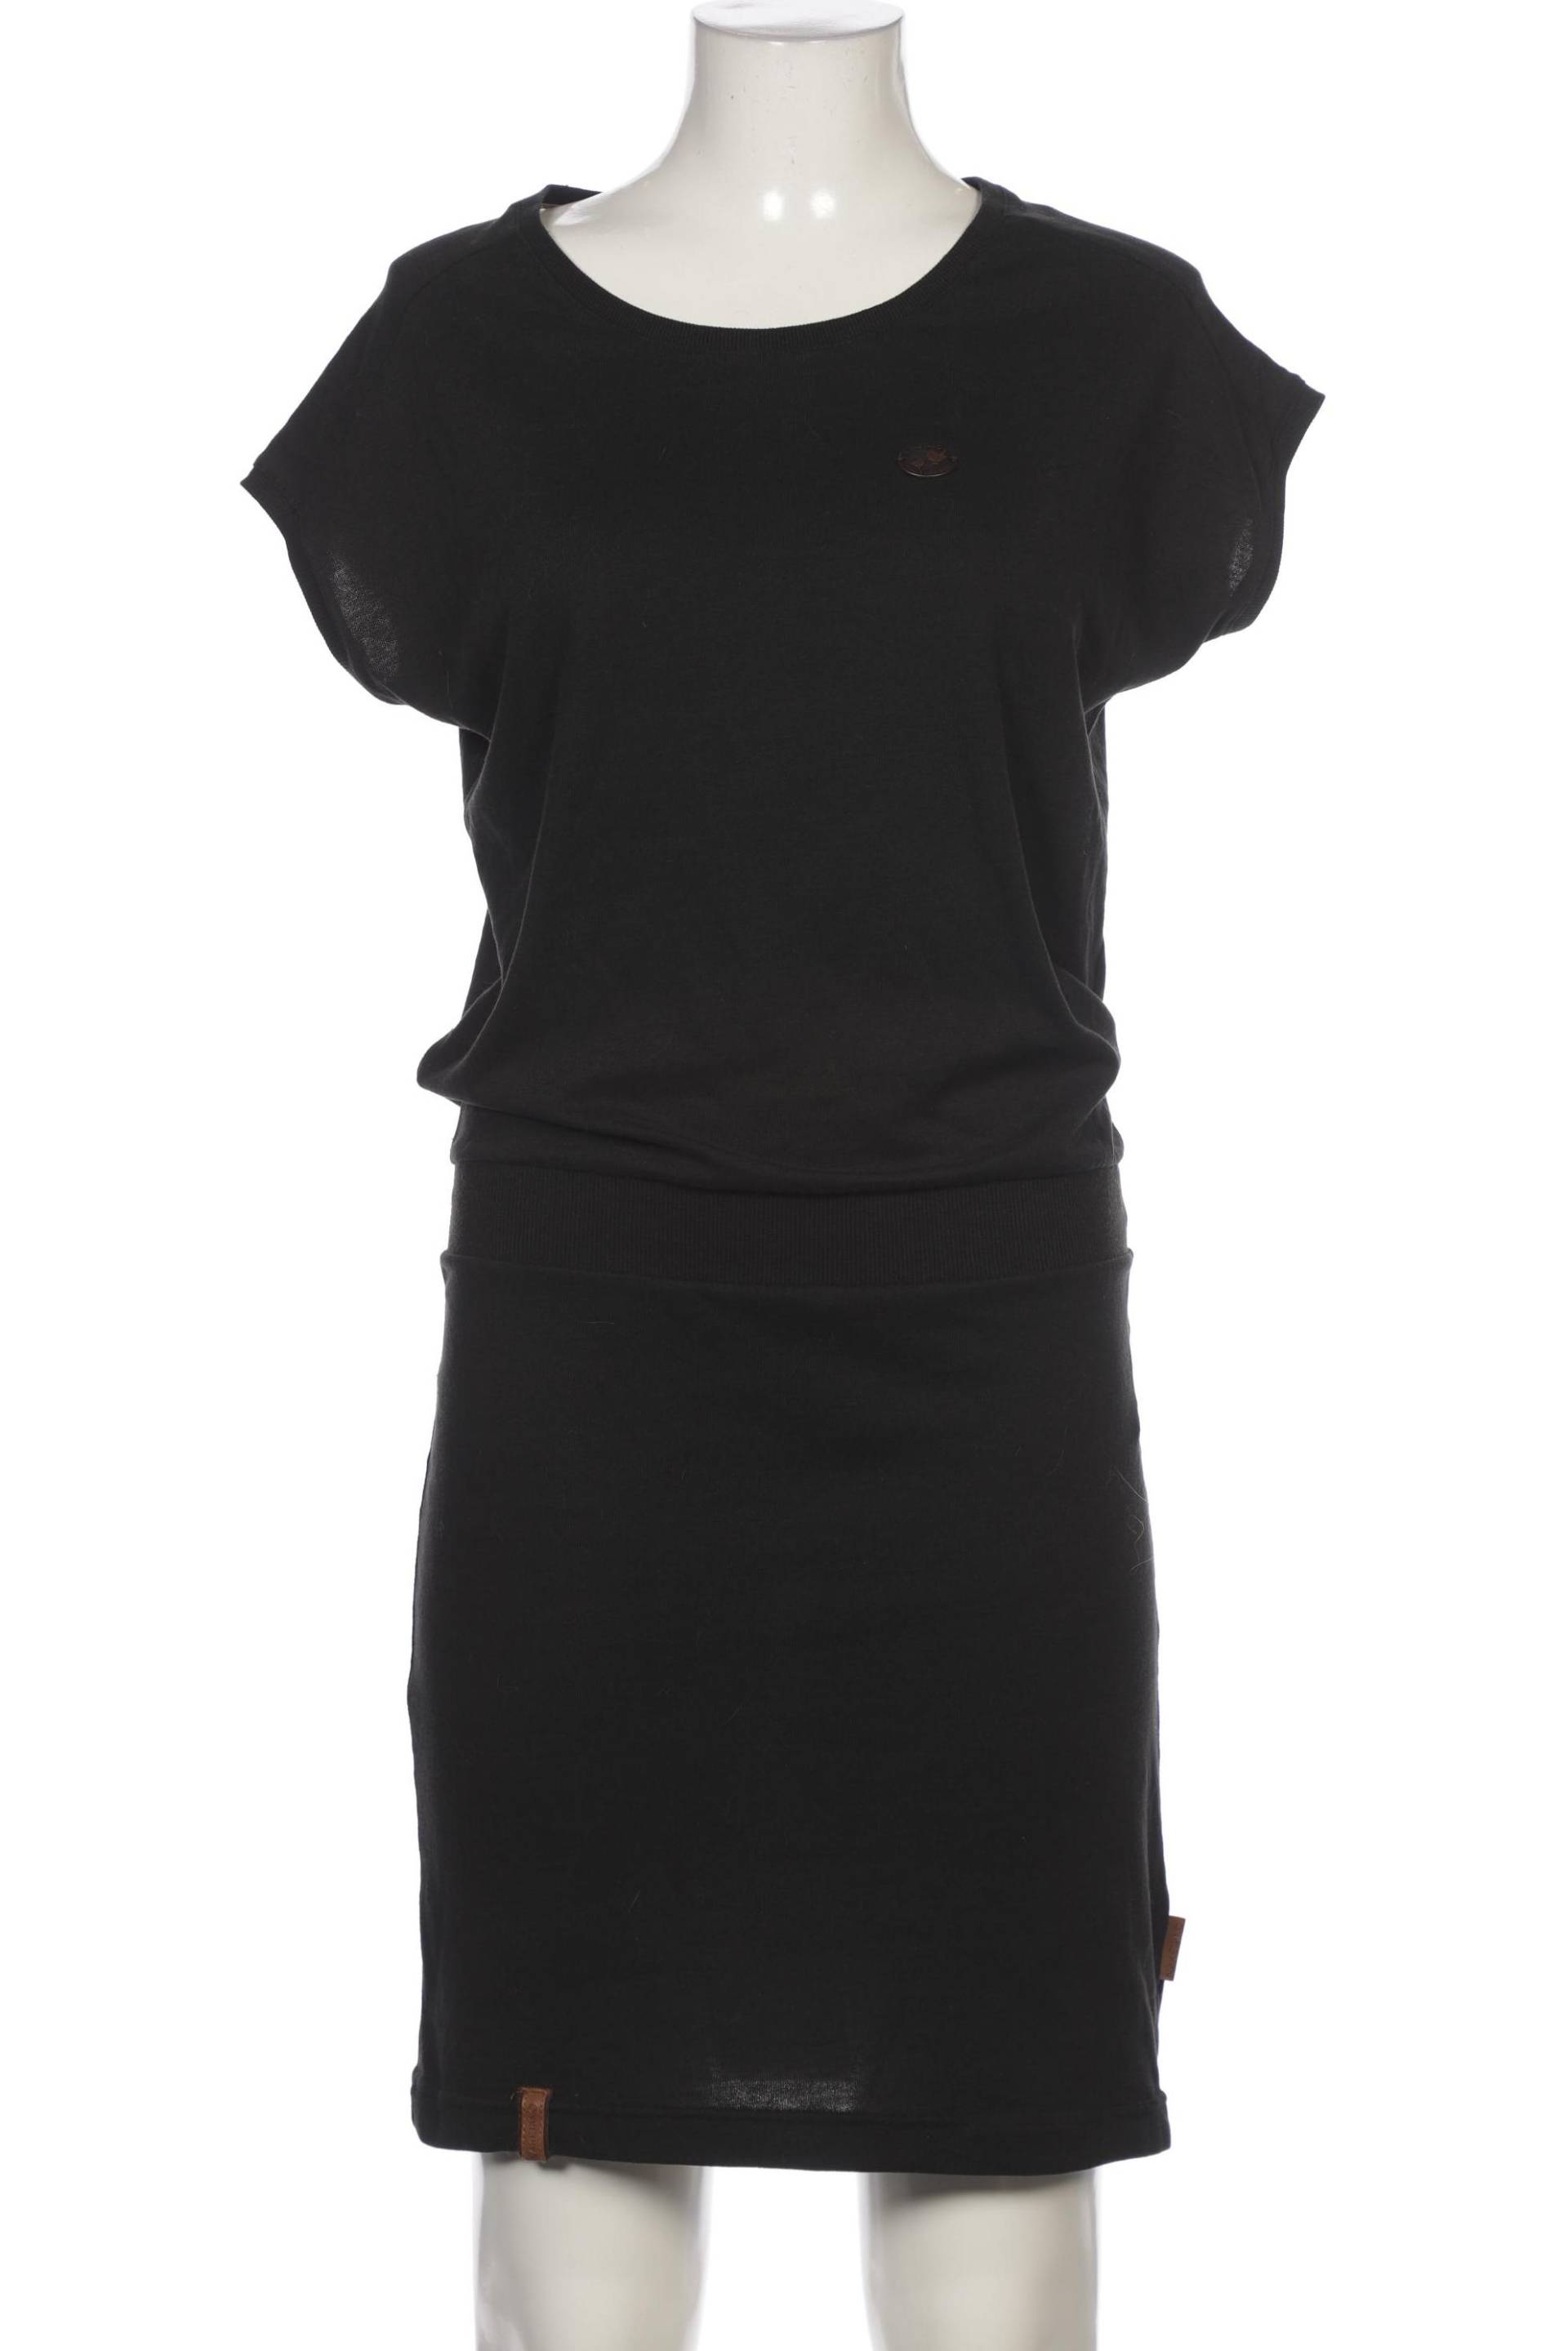 Naketano Damen Kleid, schwarz, Gr. 38 von Naketano